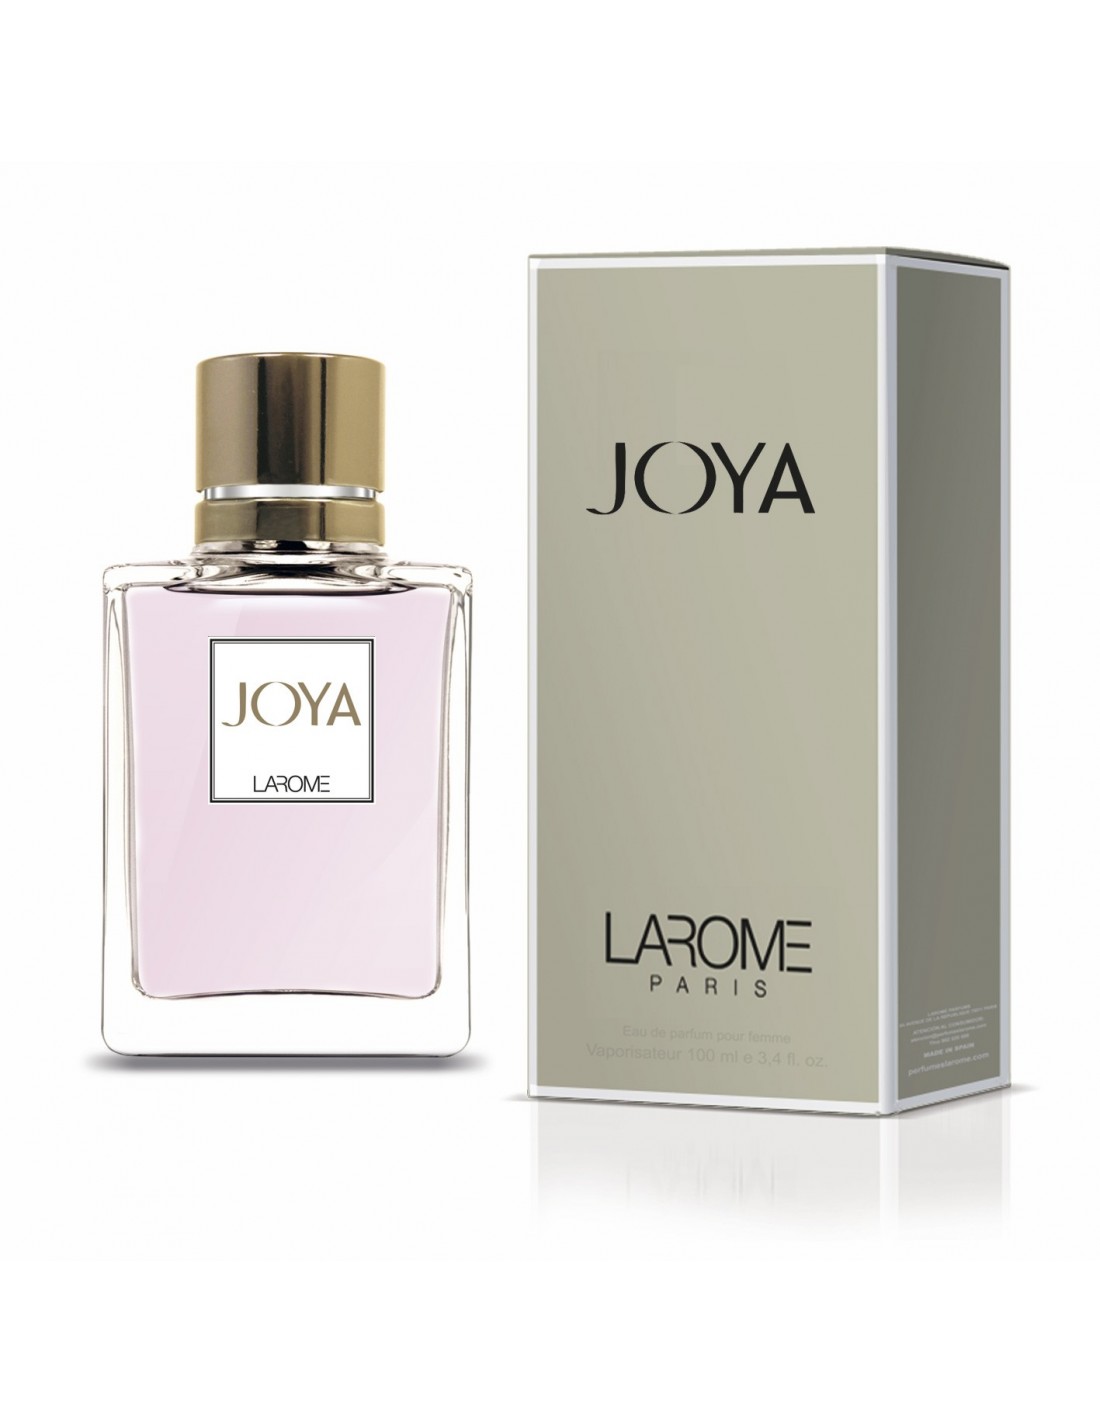 ▷ JOYA by LAROME ✶ Perfume for women 